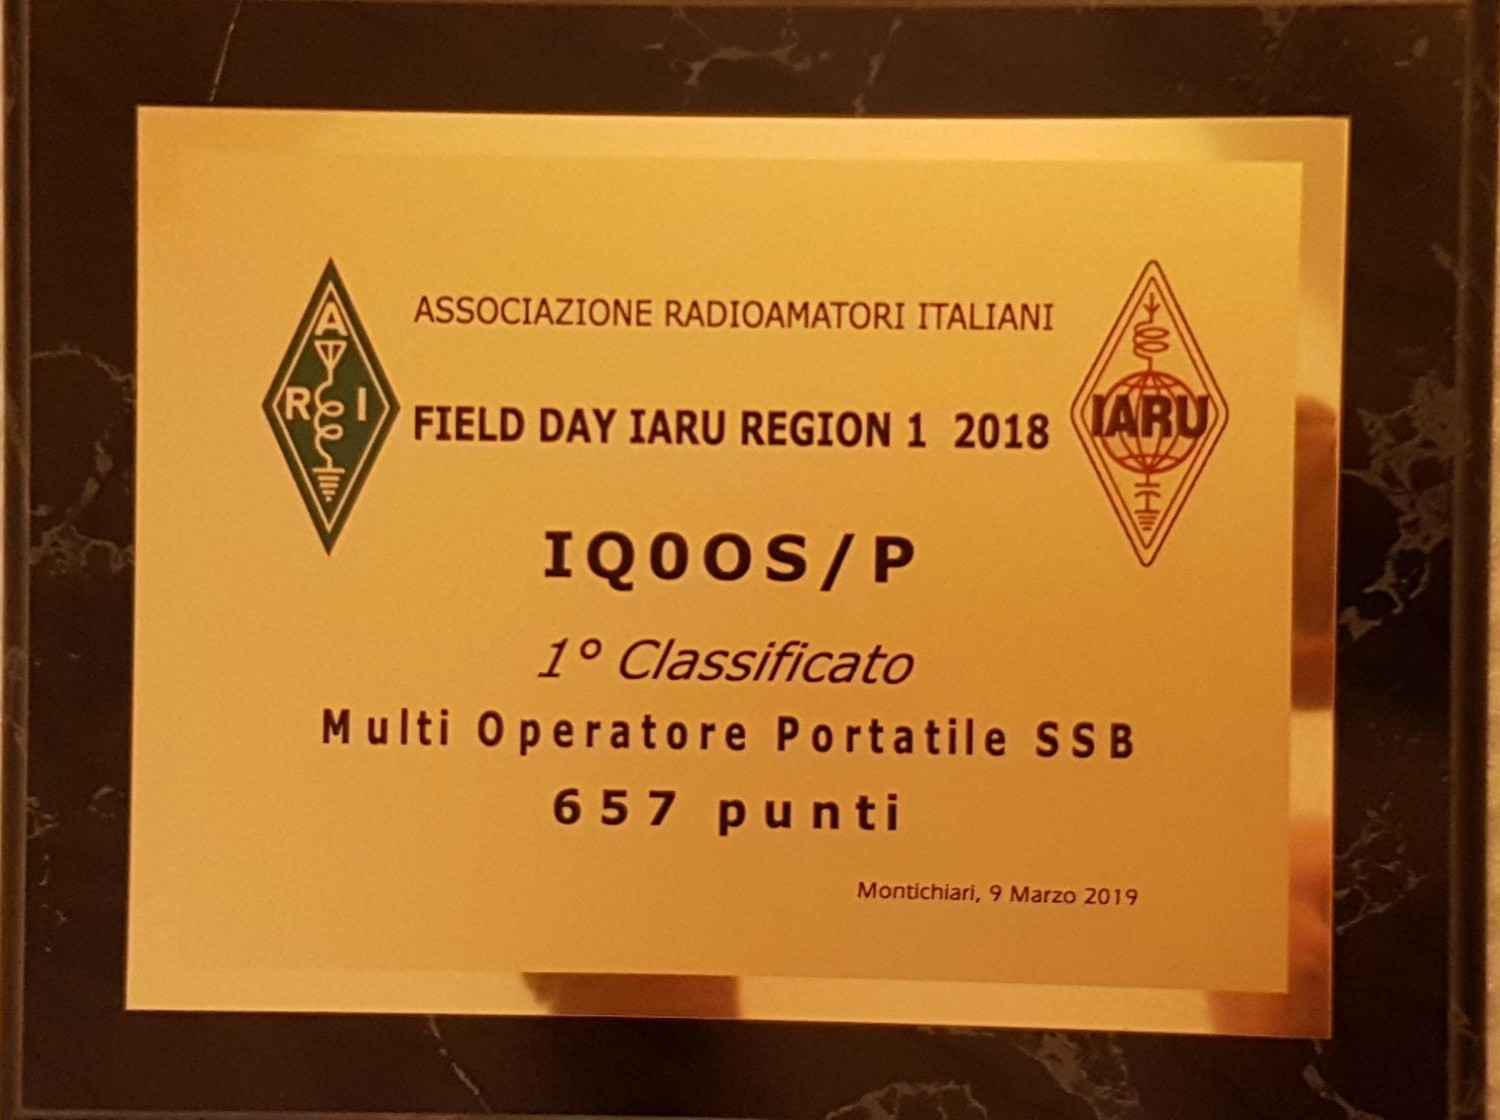 field day IARU Region 1 2018